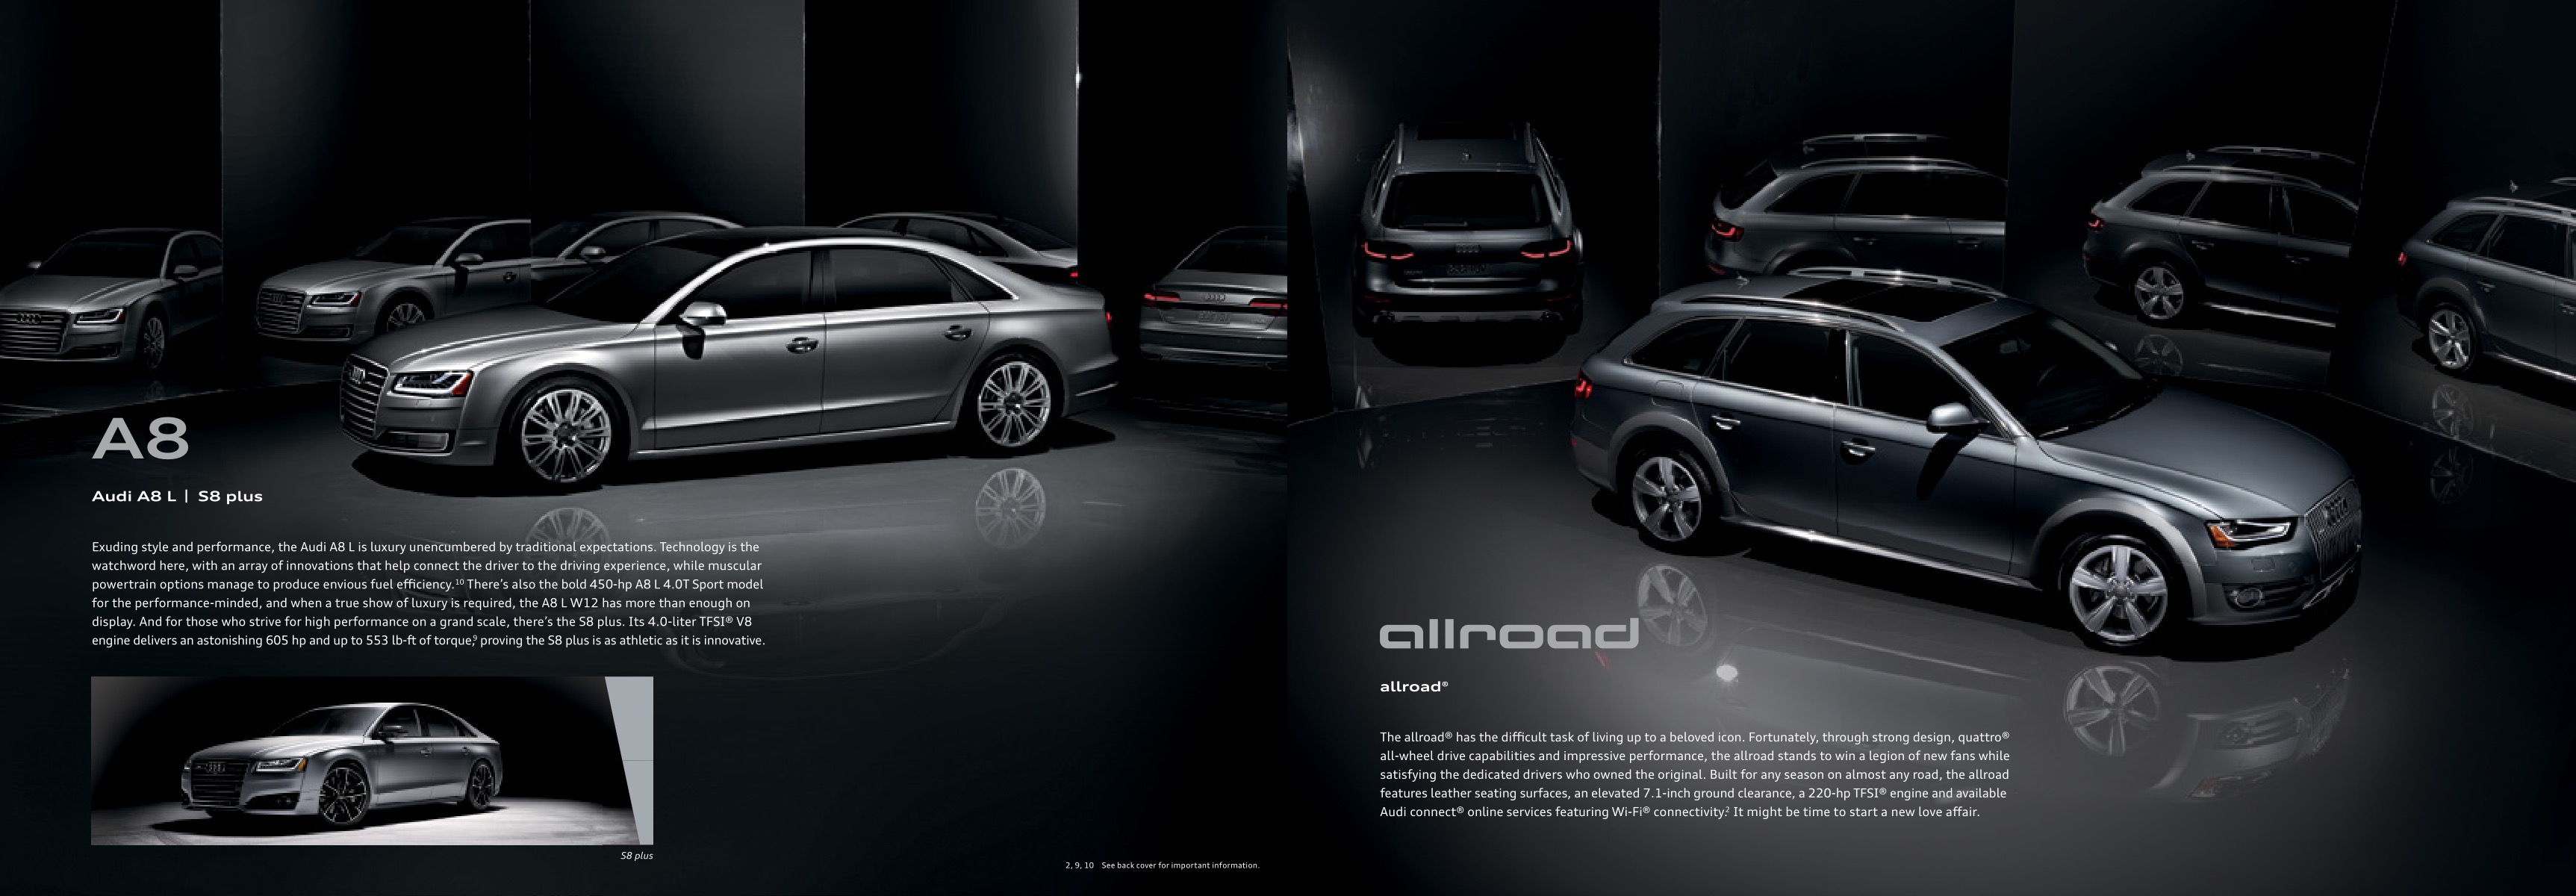 2016 Audi Brochure Page 11